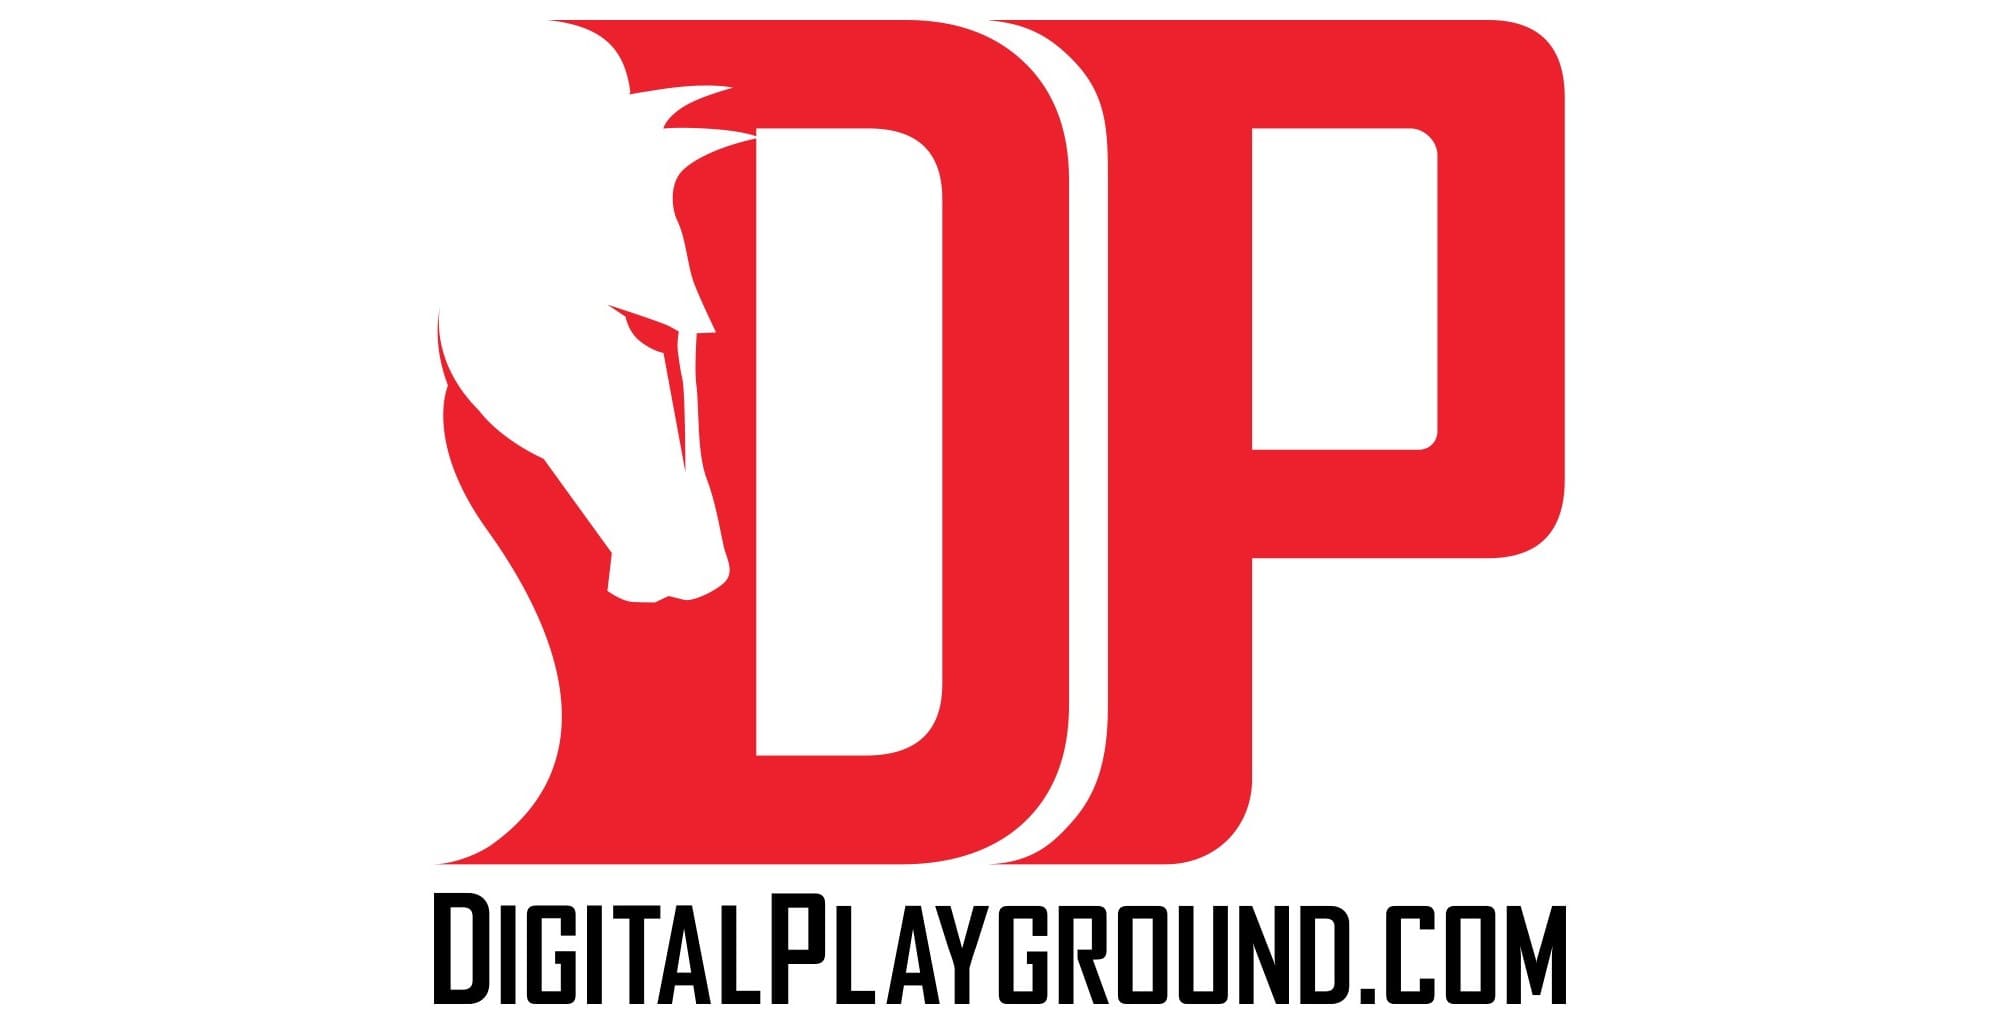 Dp Digitel Playground Com - Digital Playground Logo and symbol, meaning, history, PNG, brand